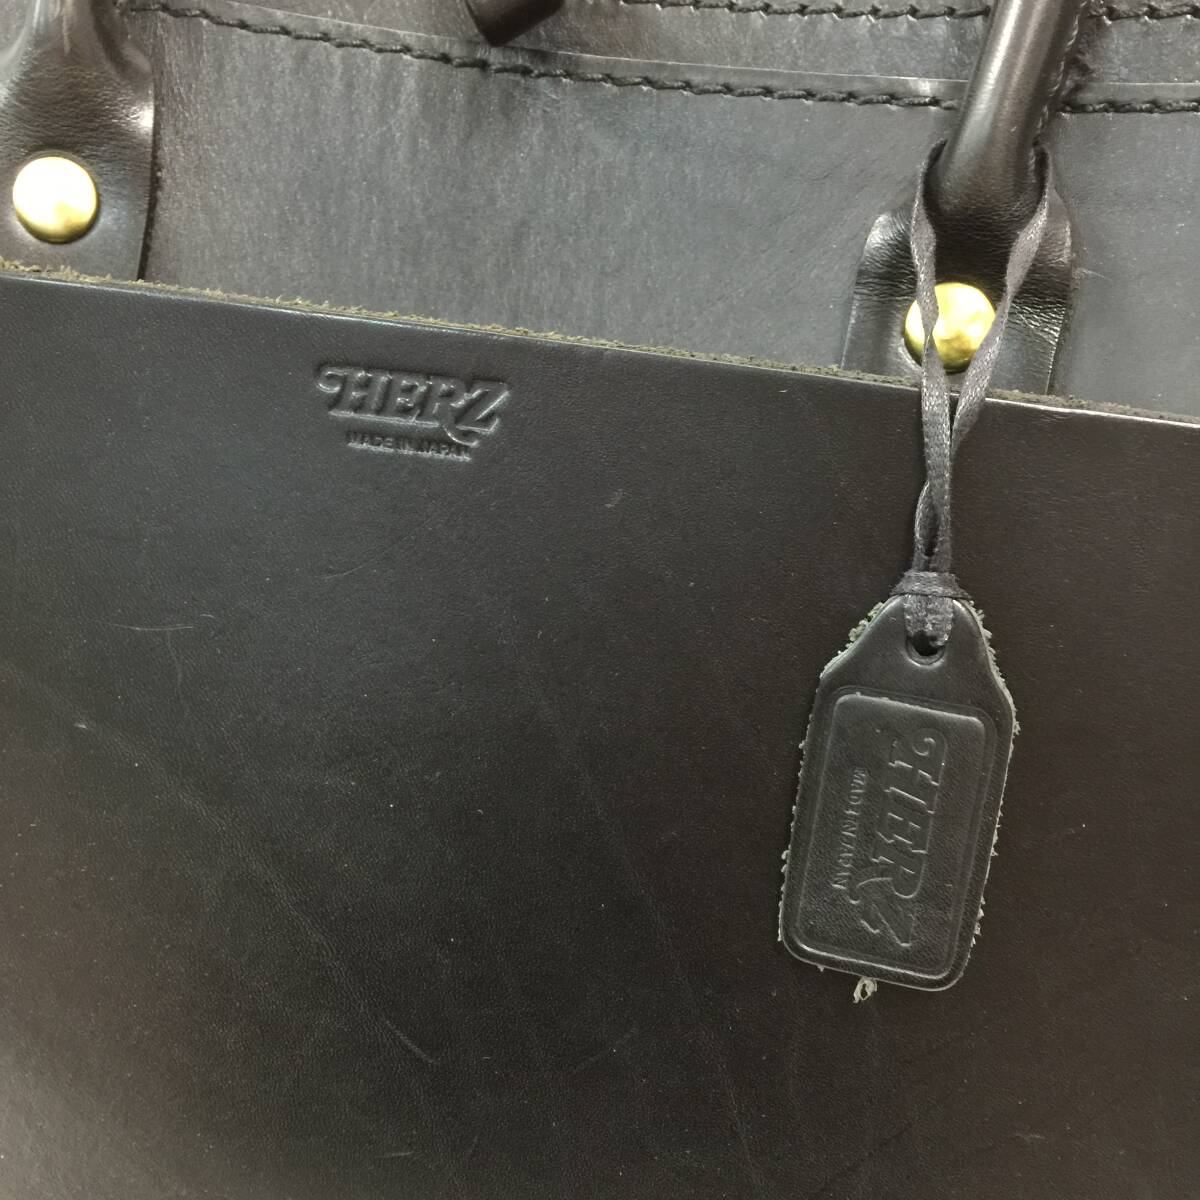 266 Herz ヘルツ 2way レザー ブリーフケース ビジネスバッグ ハンドバッグ 鞄 バッグ 本革 皮革 上質 書類鞄 メンズ ブラック 黒の画像5